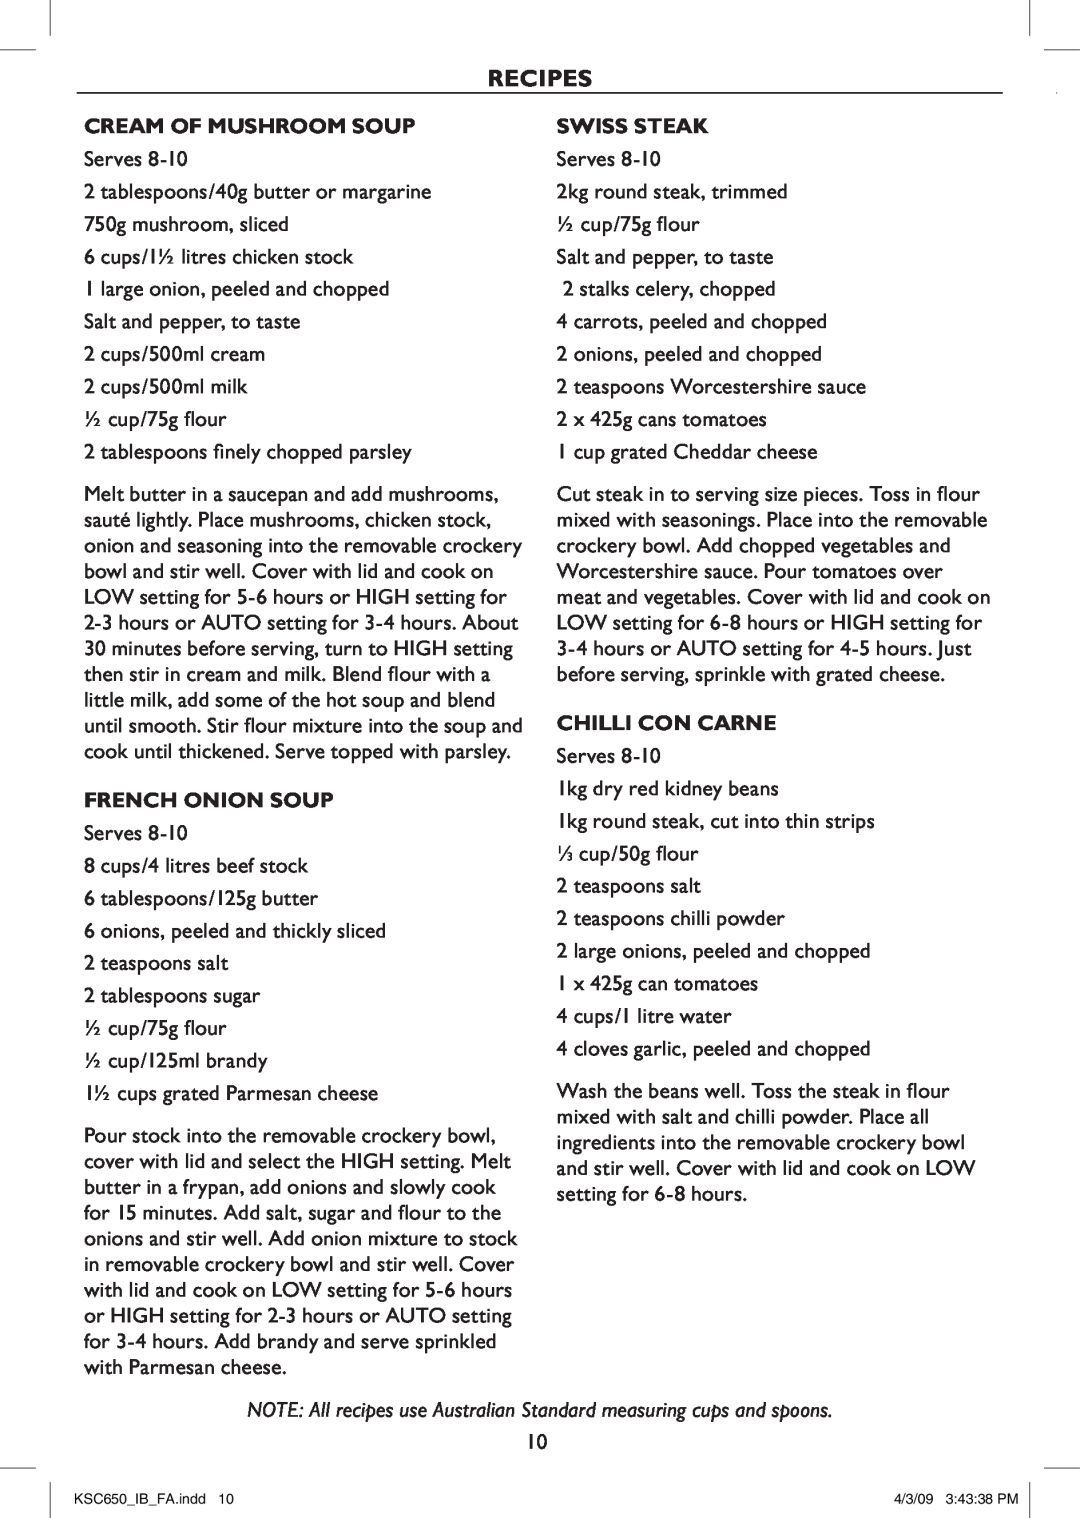 Kambrook KSC650 manual Recipes, Cream Of Mushroom Soup, French Onion Soup, Swiss Steak, Chilli Con Carne 